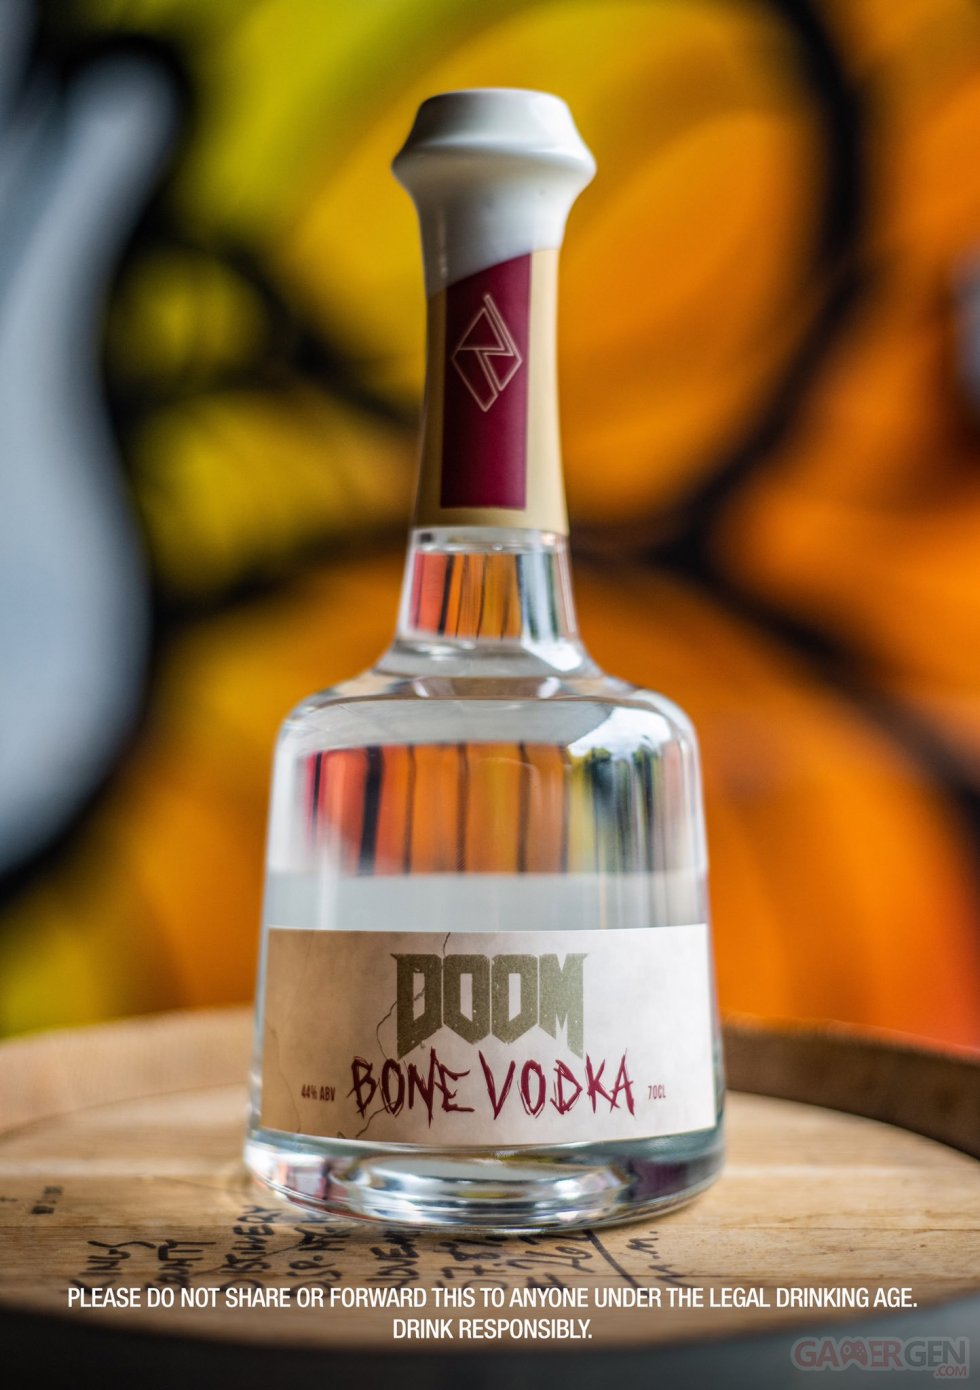 DOOM Bone Vodka